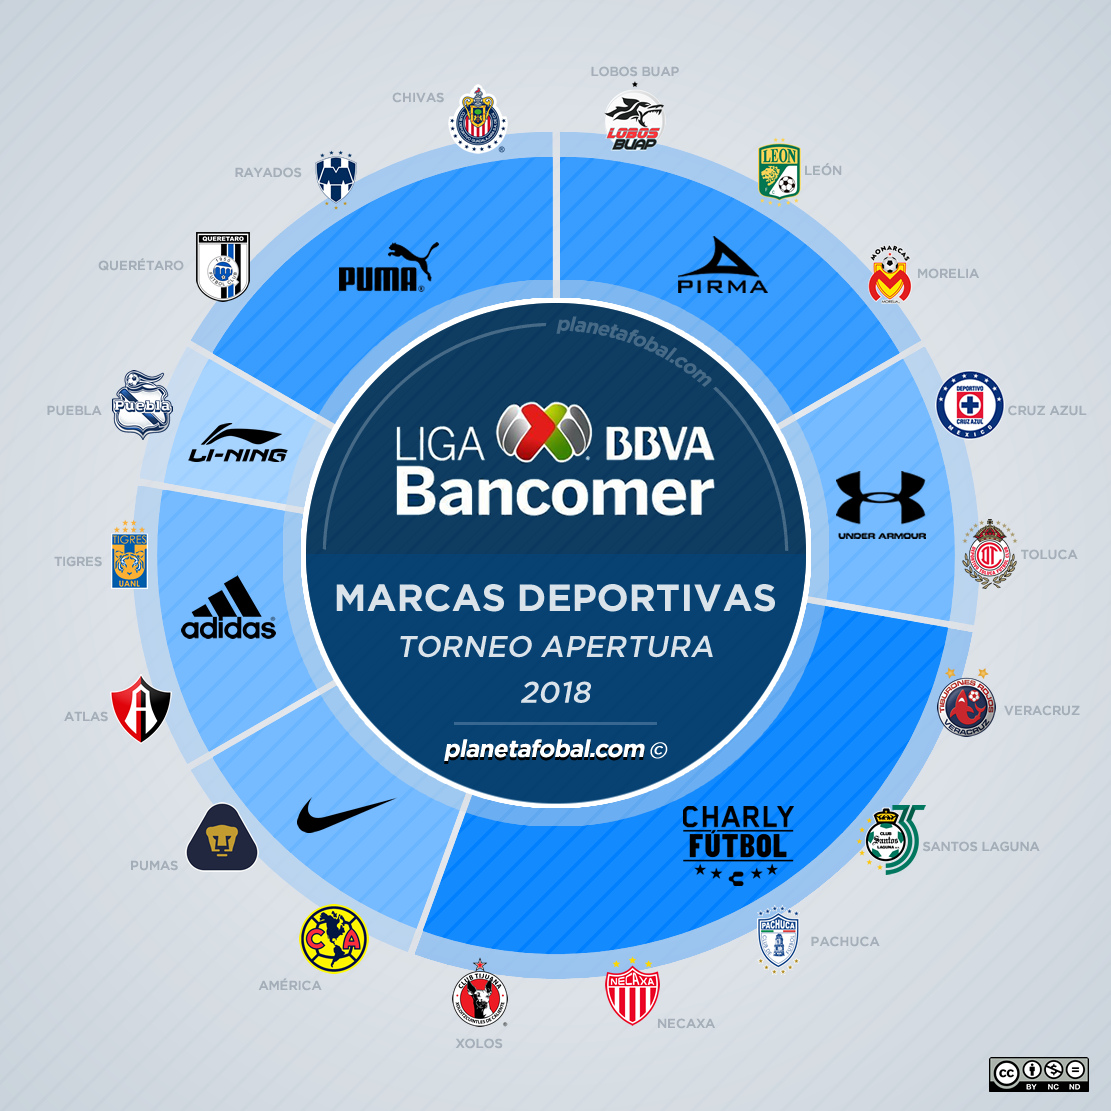 As fabricantes esportivas no Campeonato Mexicano 2019 - Show de